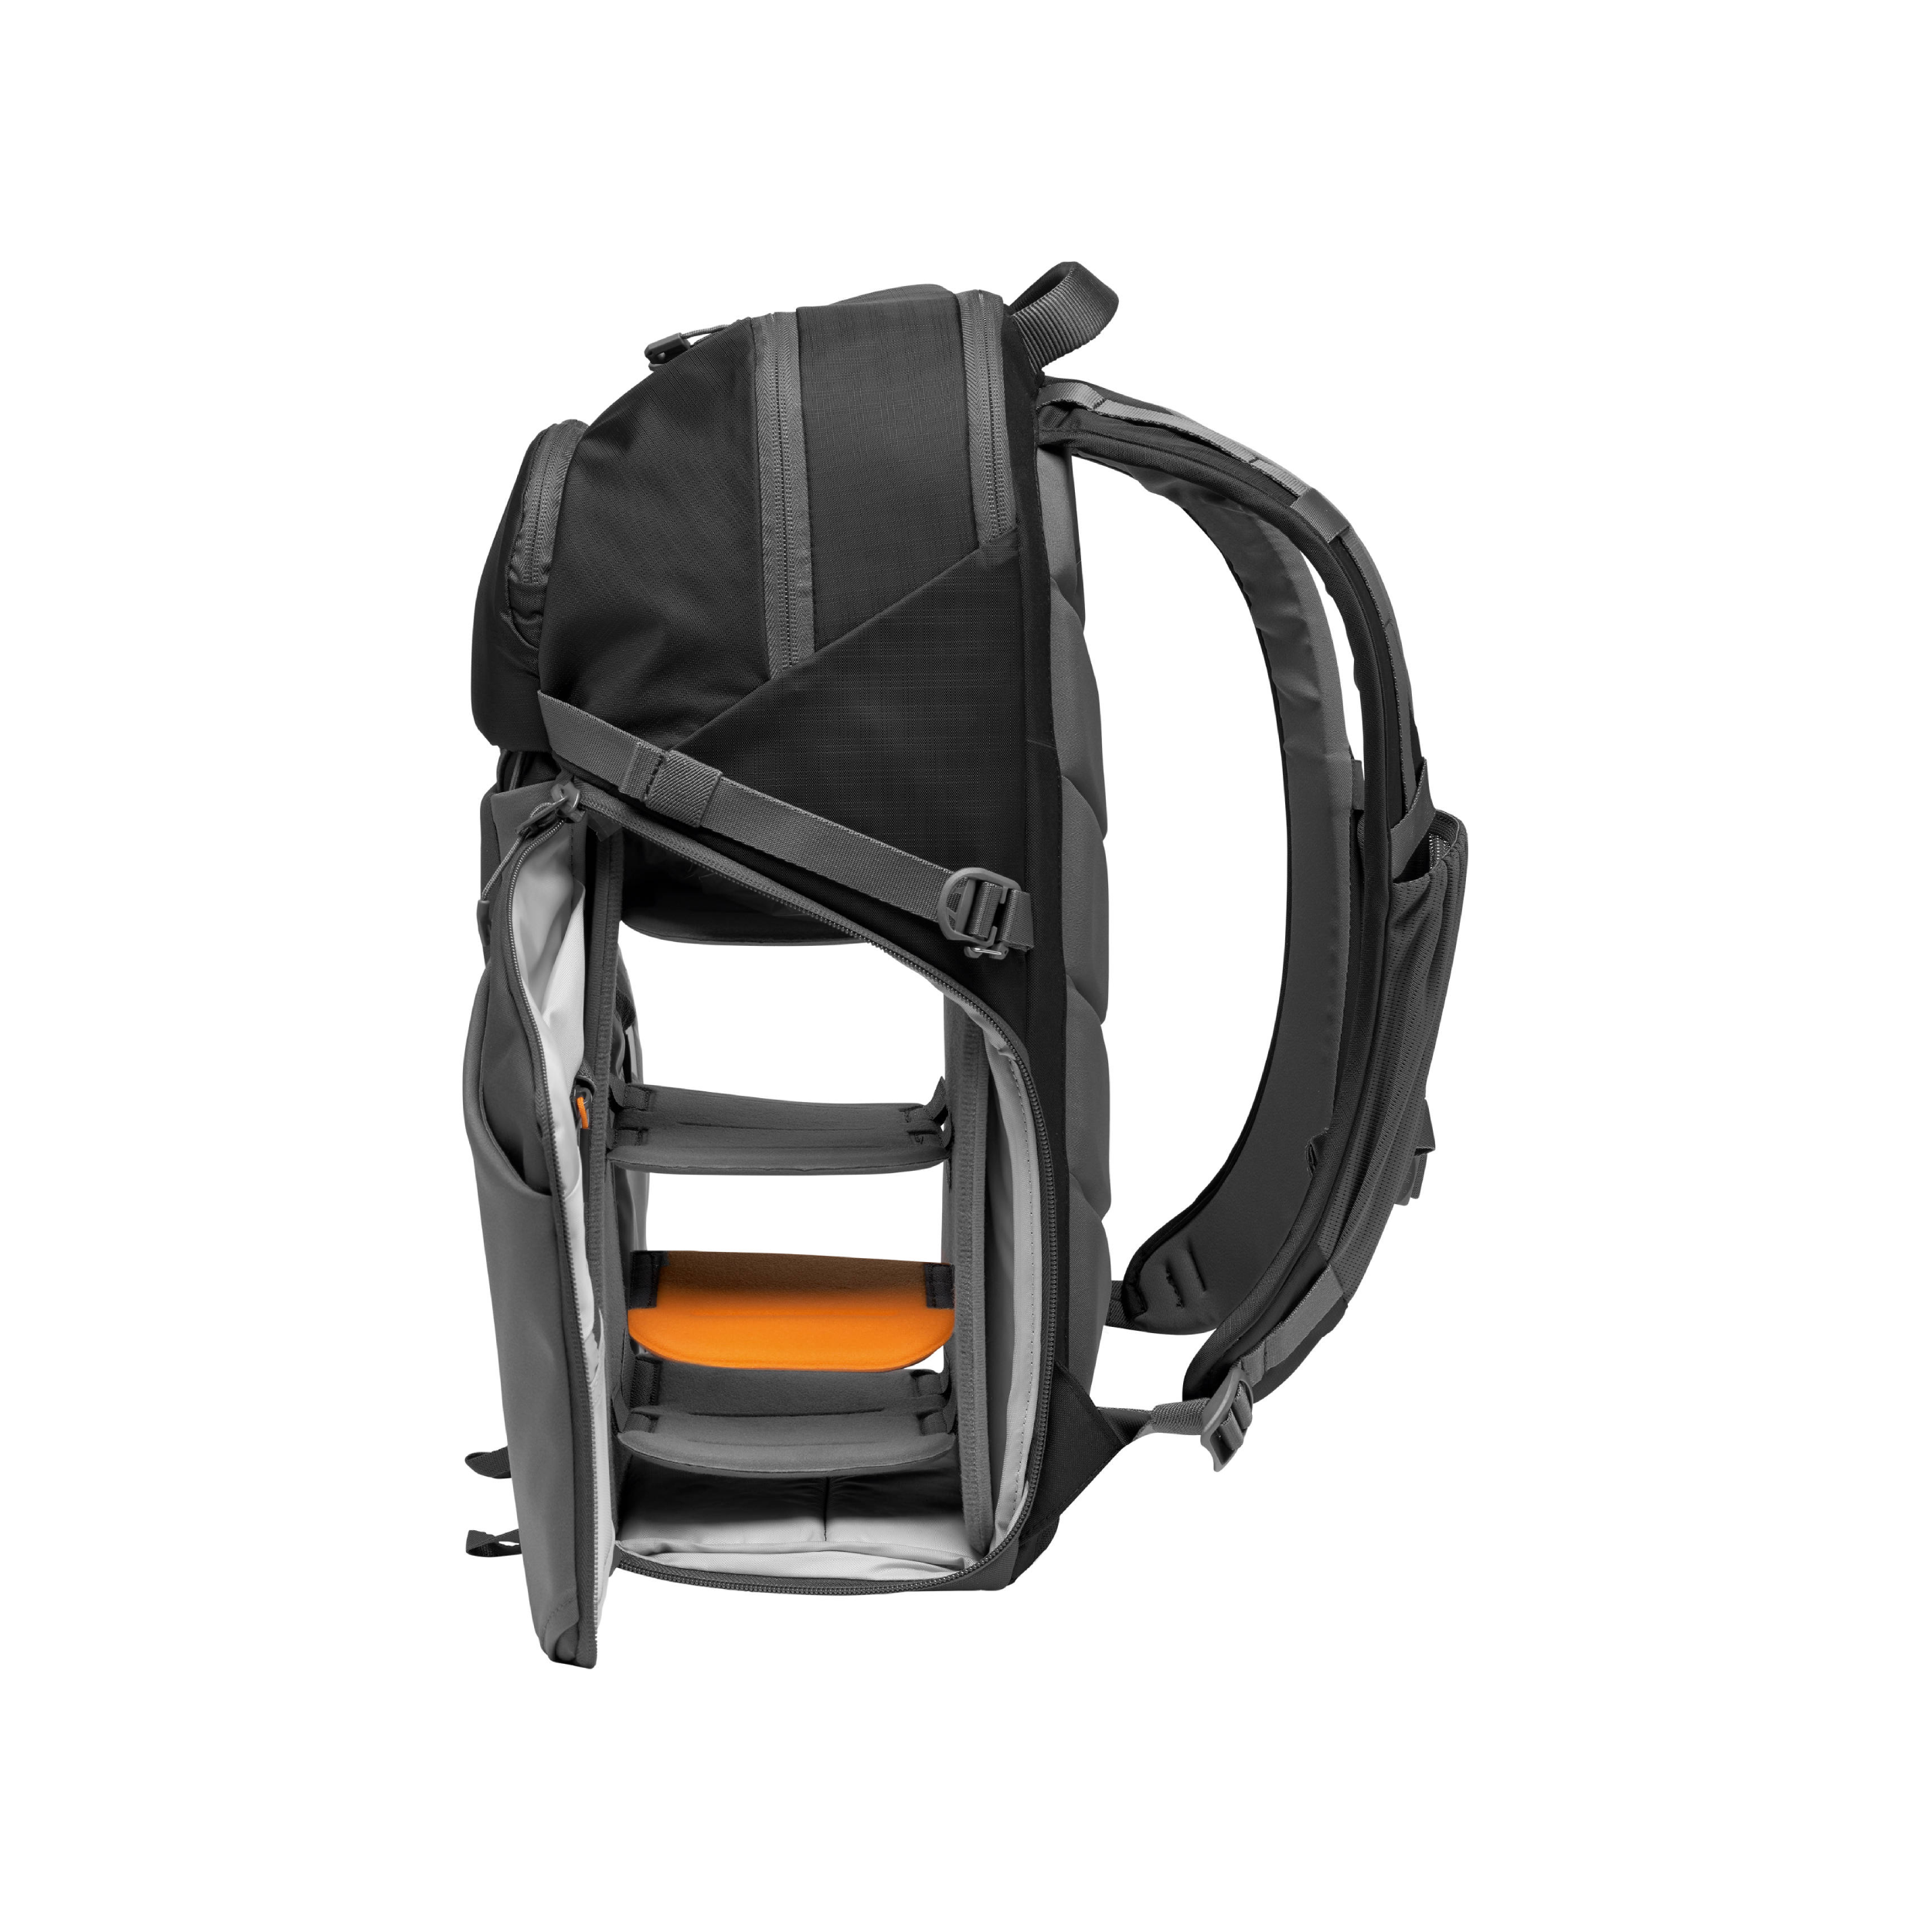 Lowepro Photo Active BP Backpack - 300W - Black